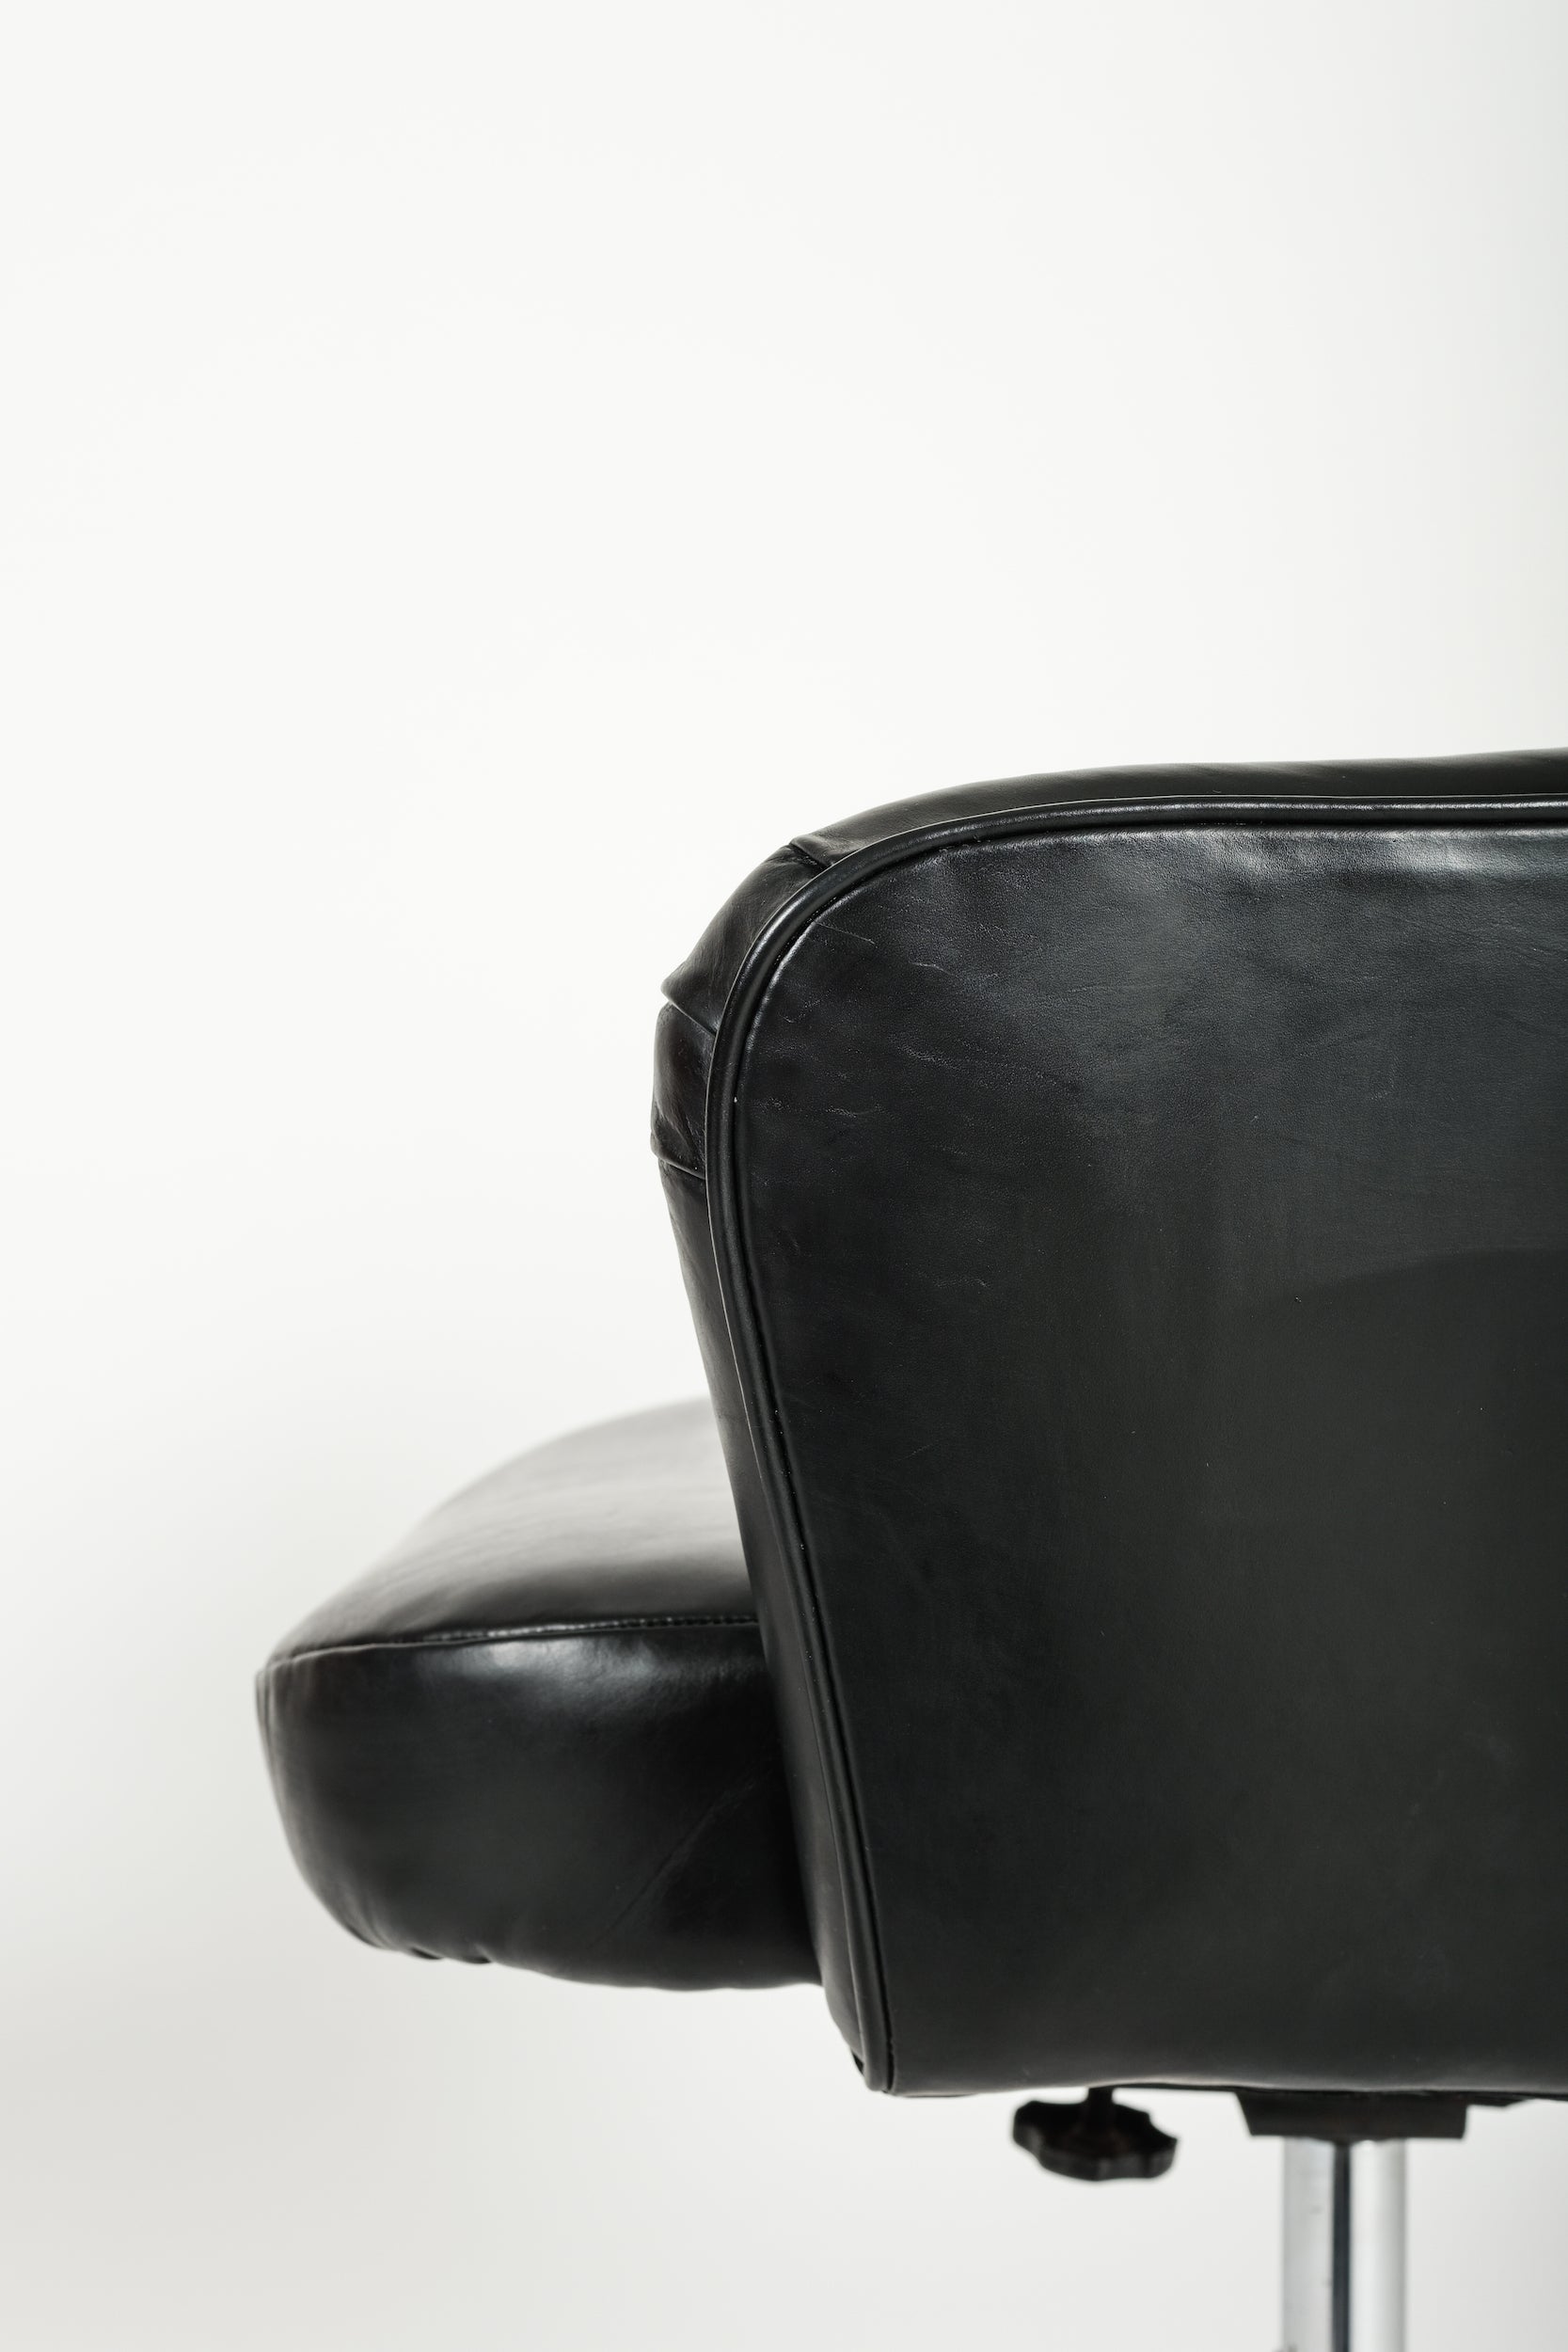 Eero Saarinen Office chair with Knoll 70 armrests